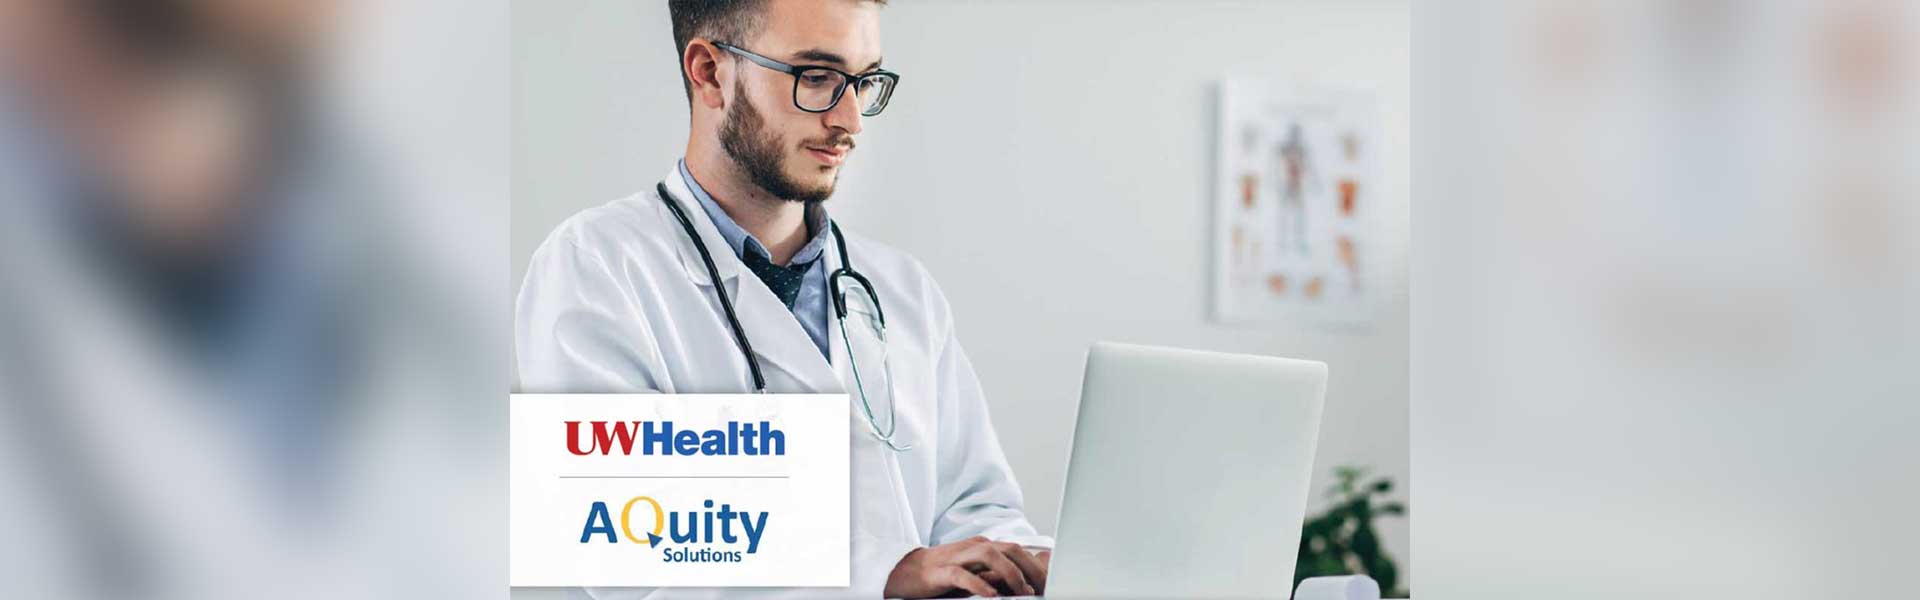 UW Health and AQuity Partnership